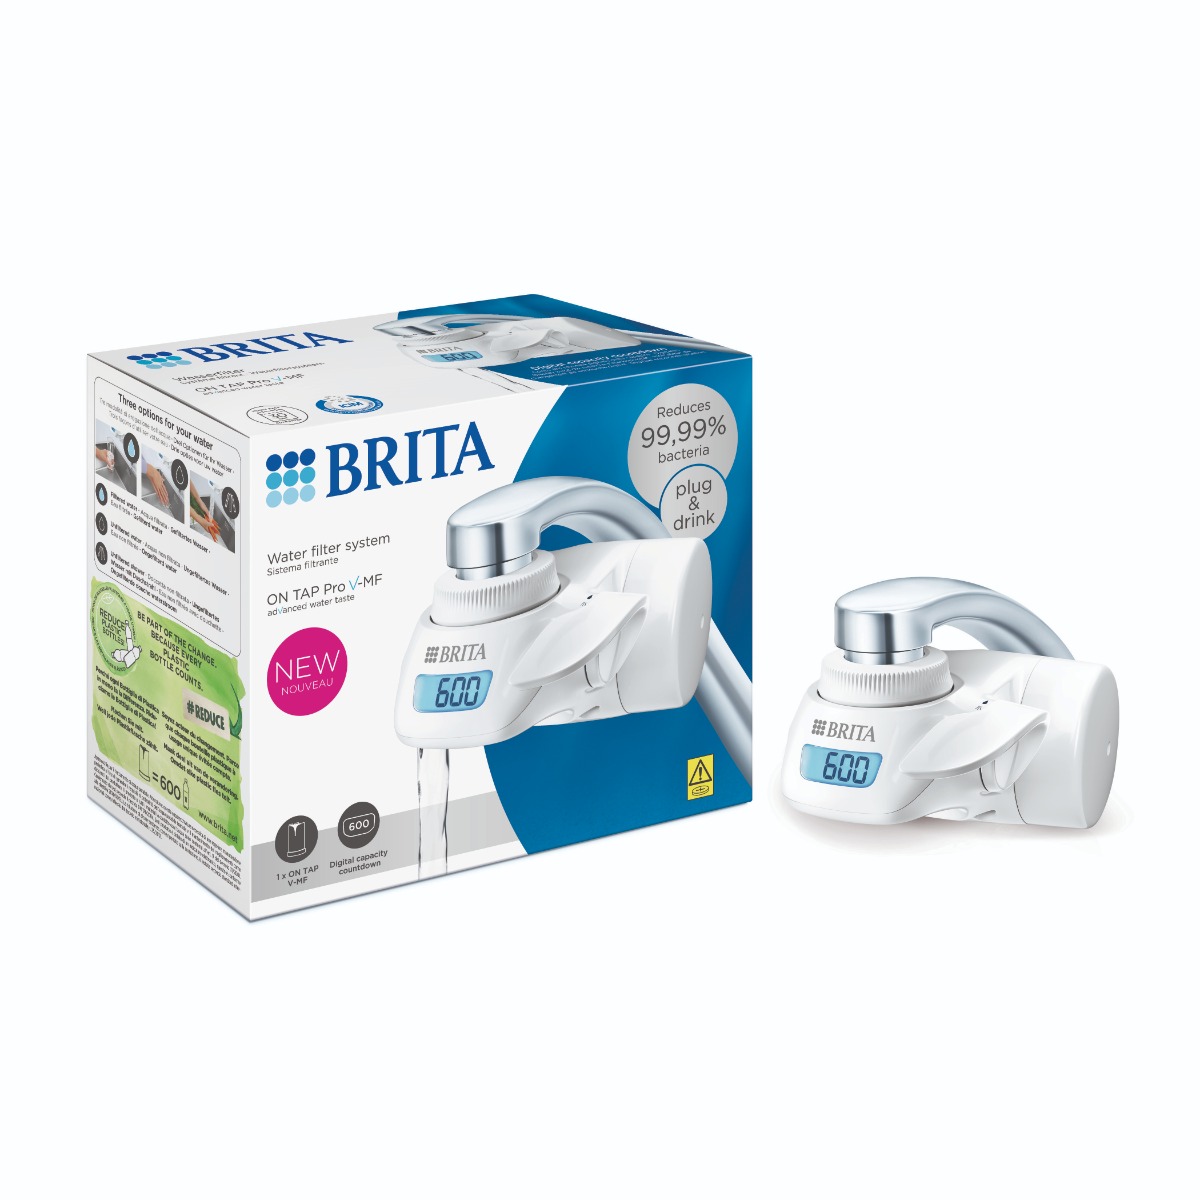 BRITA ON TAP Pro V-MF System vodní filtr na kohoutek s displejem BRITA